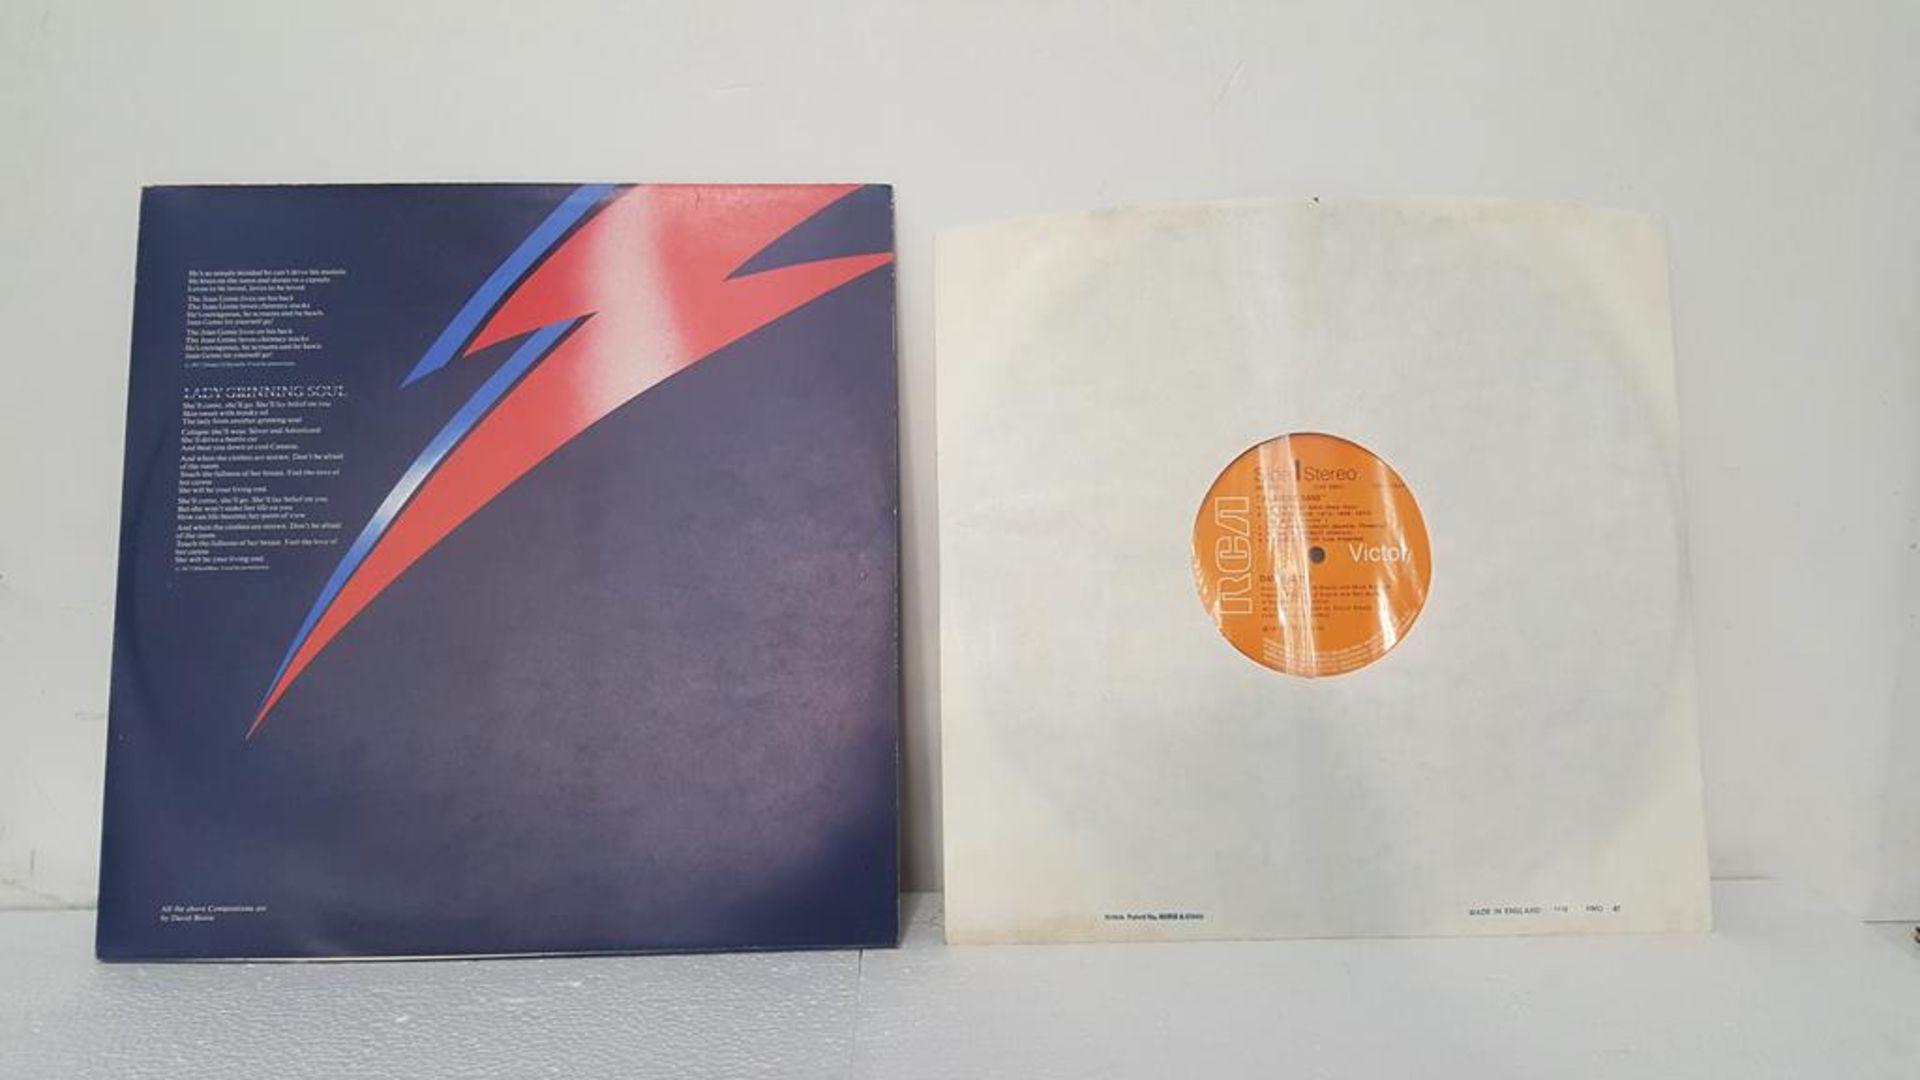 David Bowie 'Aladdin Sane' LP with signed Fan Membership Leaflet - Image 4 of 9